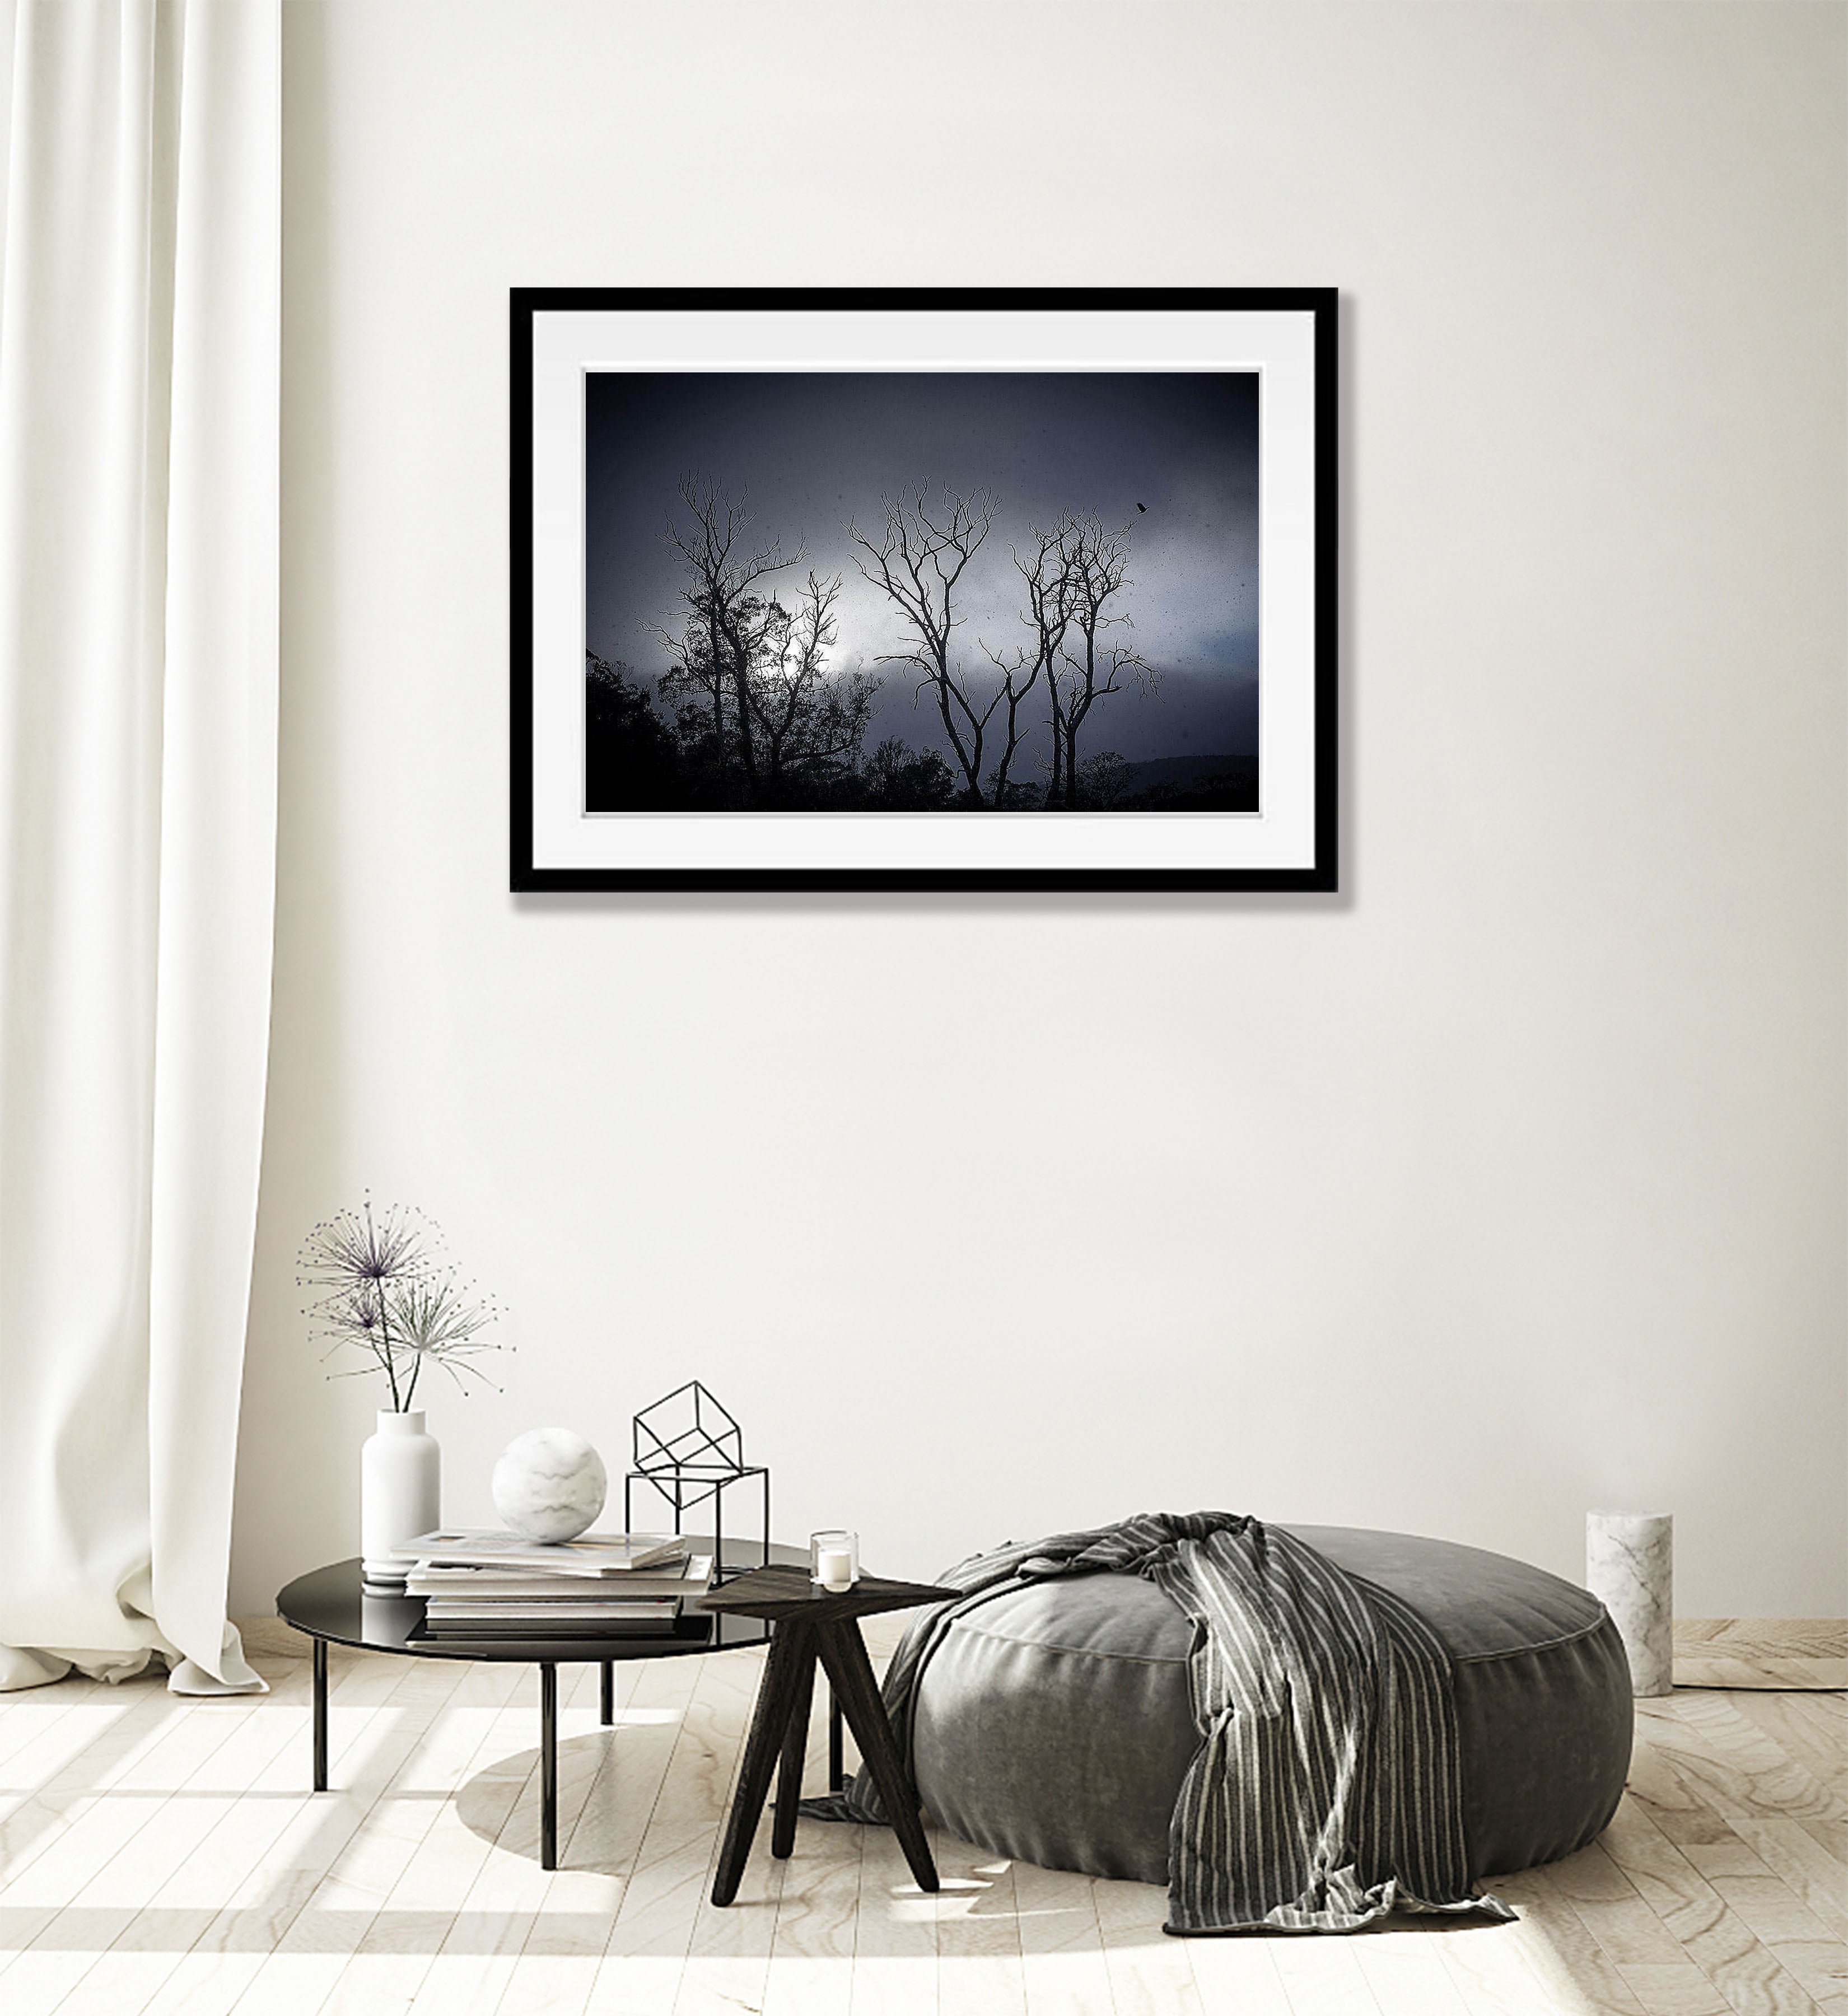 ARTWORK INSTOCK - Snow Currawong, Cradle Mountain, TAS - 100 x 66cms Canvas Black Framed Print